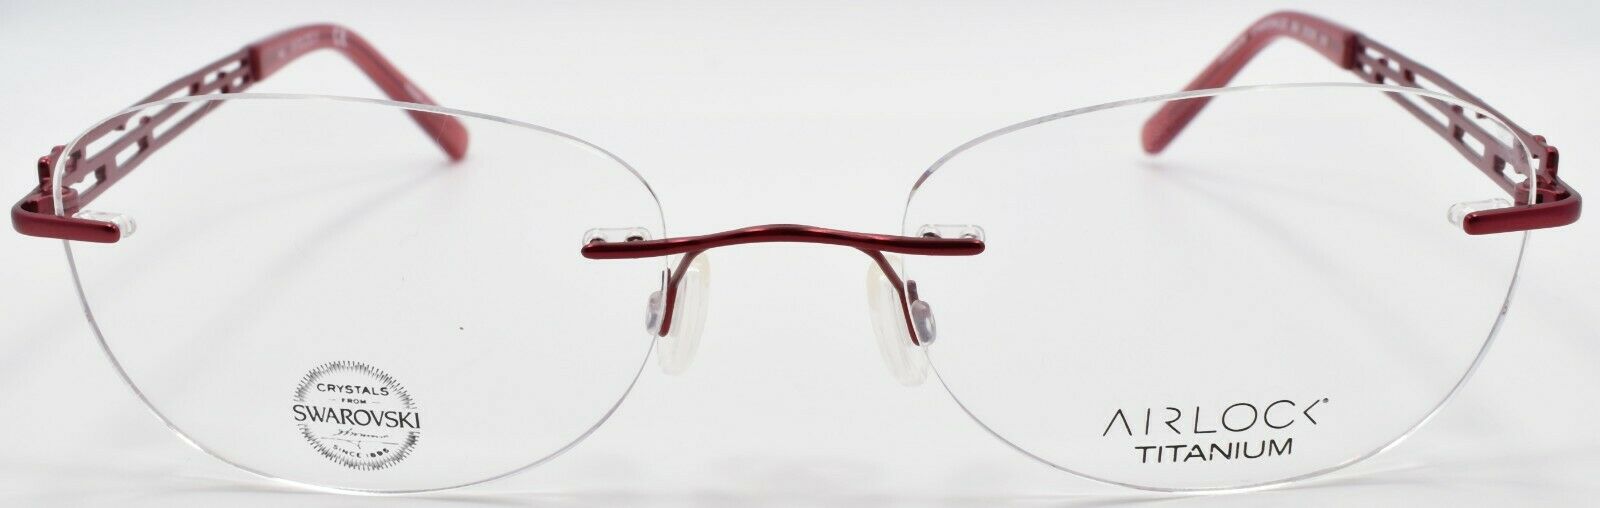 2-Airlock Charisma 202 604 Women's Glasses Rimless 51-18-140 Burgundy w/ Swarovski-886895364829-IKSpecs